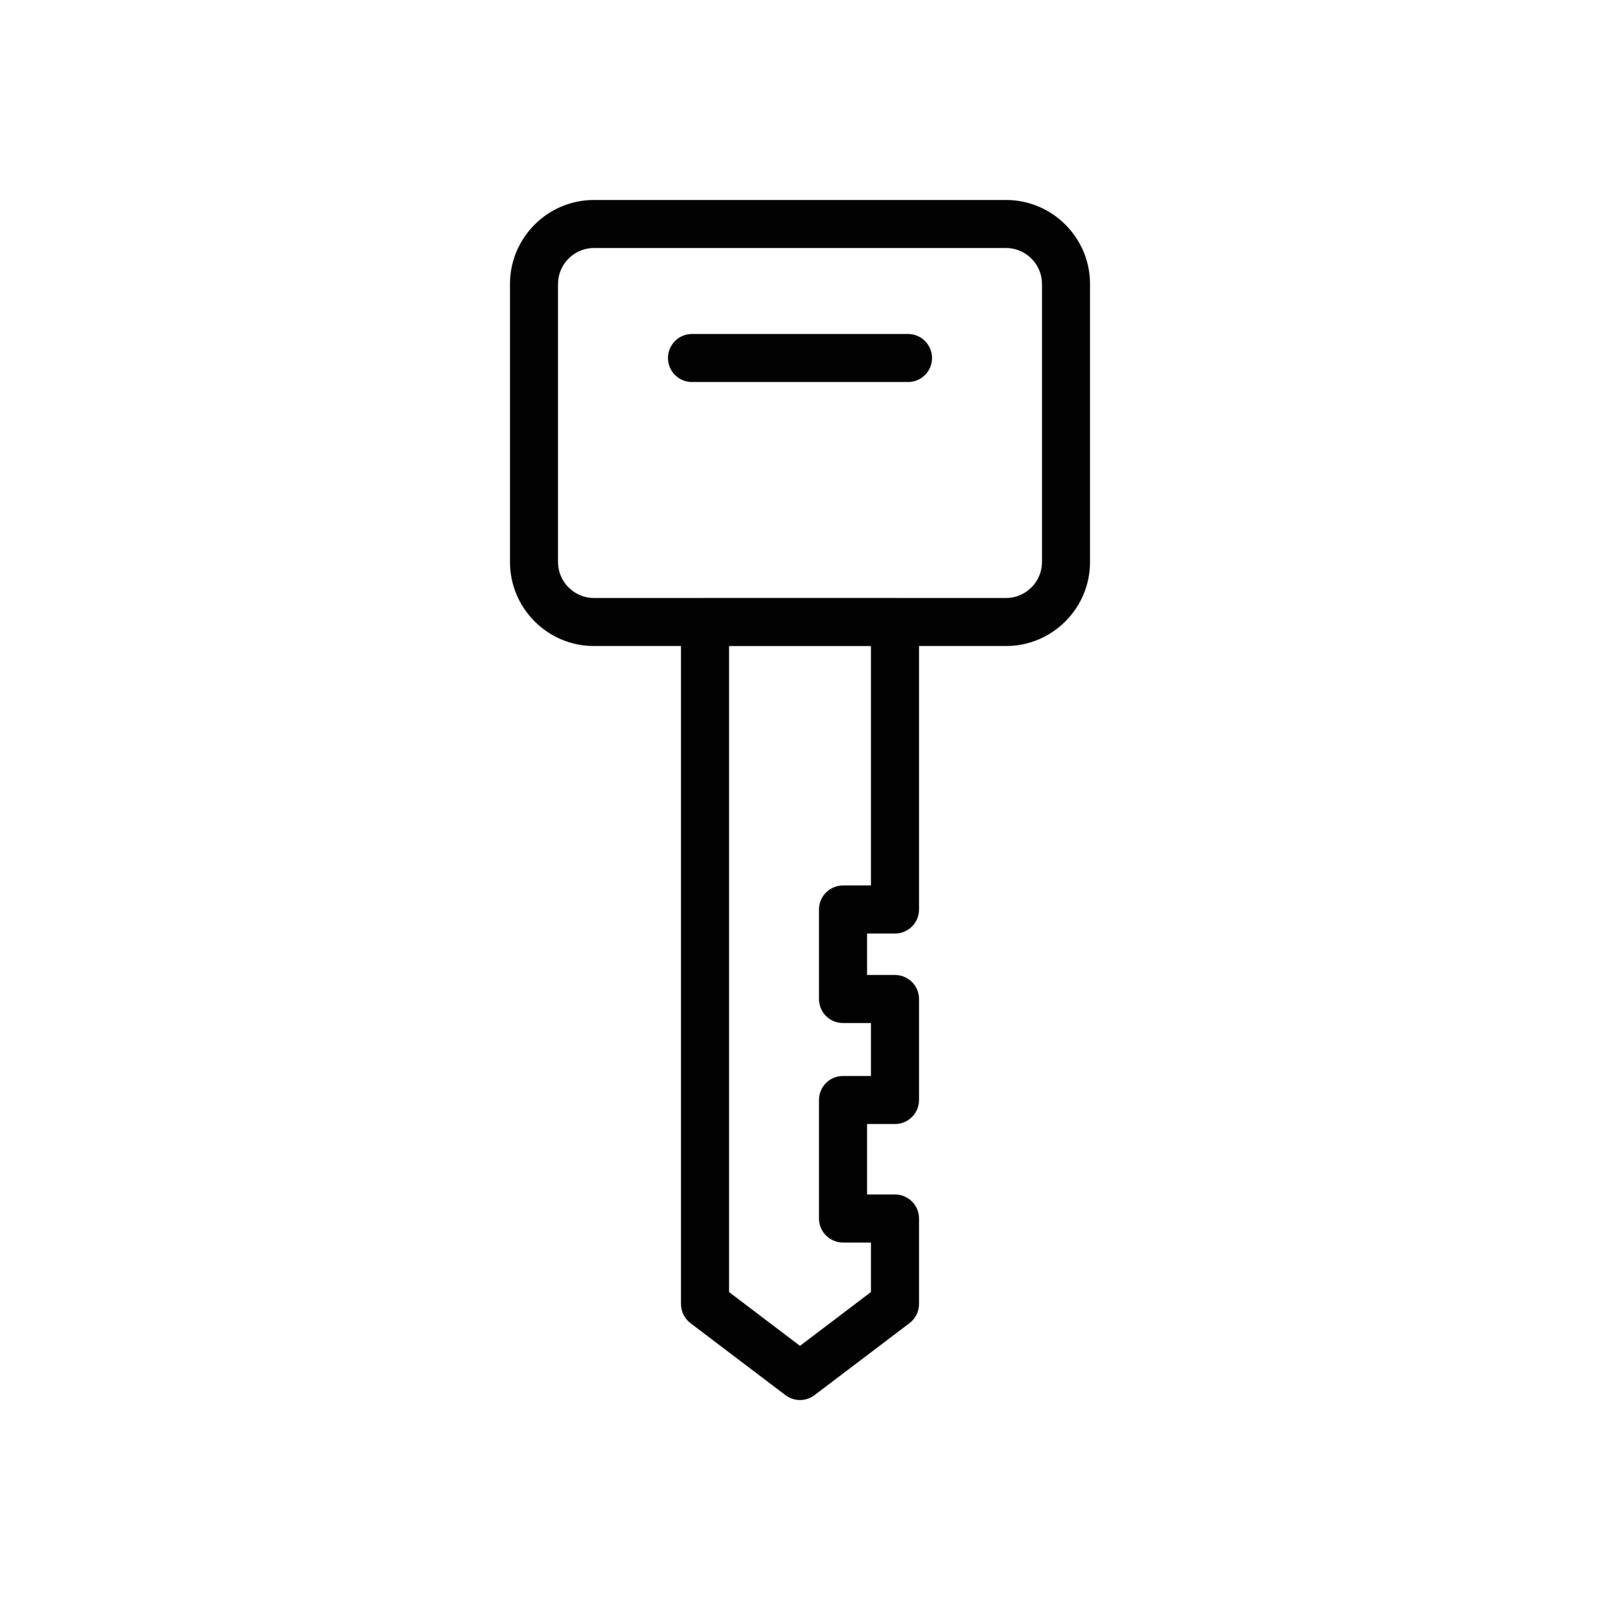 key by vectorstall